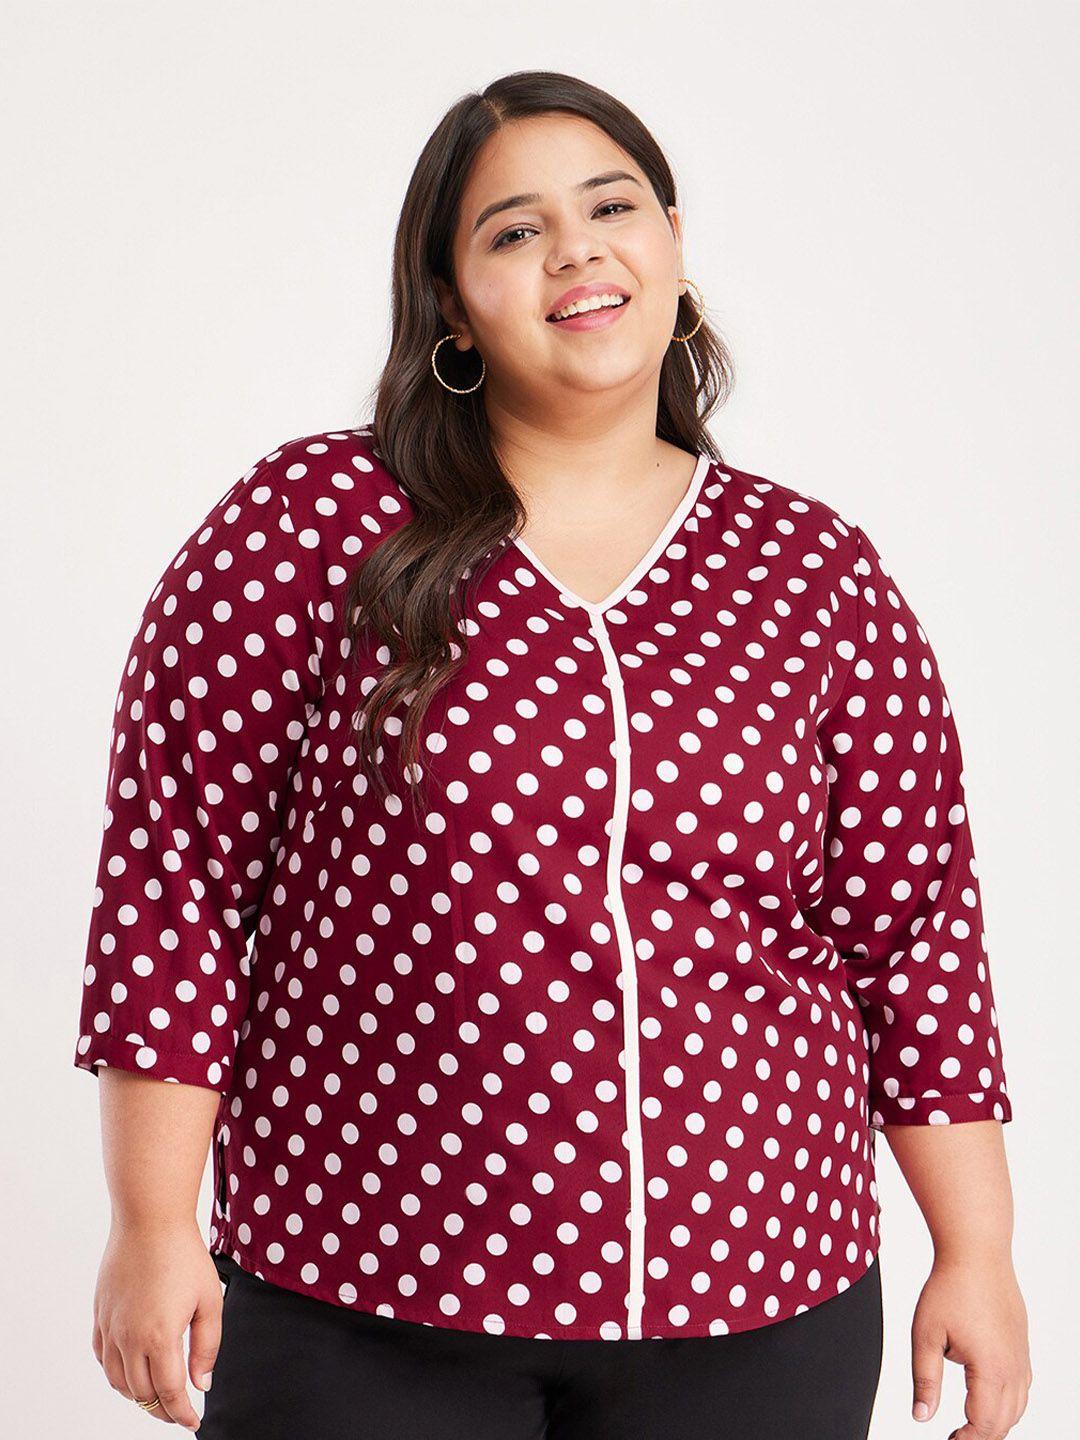 fablestreet x maroon polka dot printed shirt style top